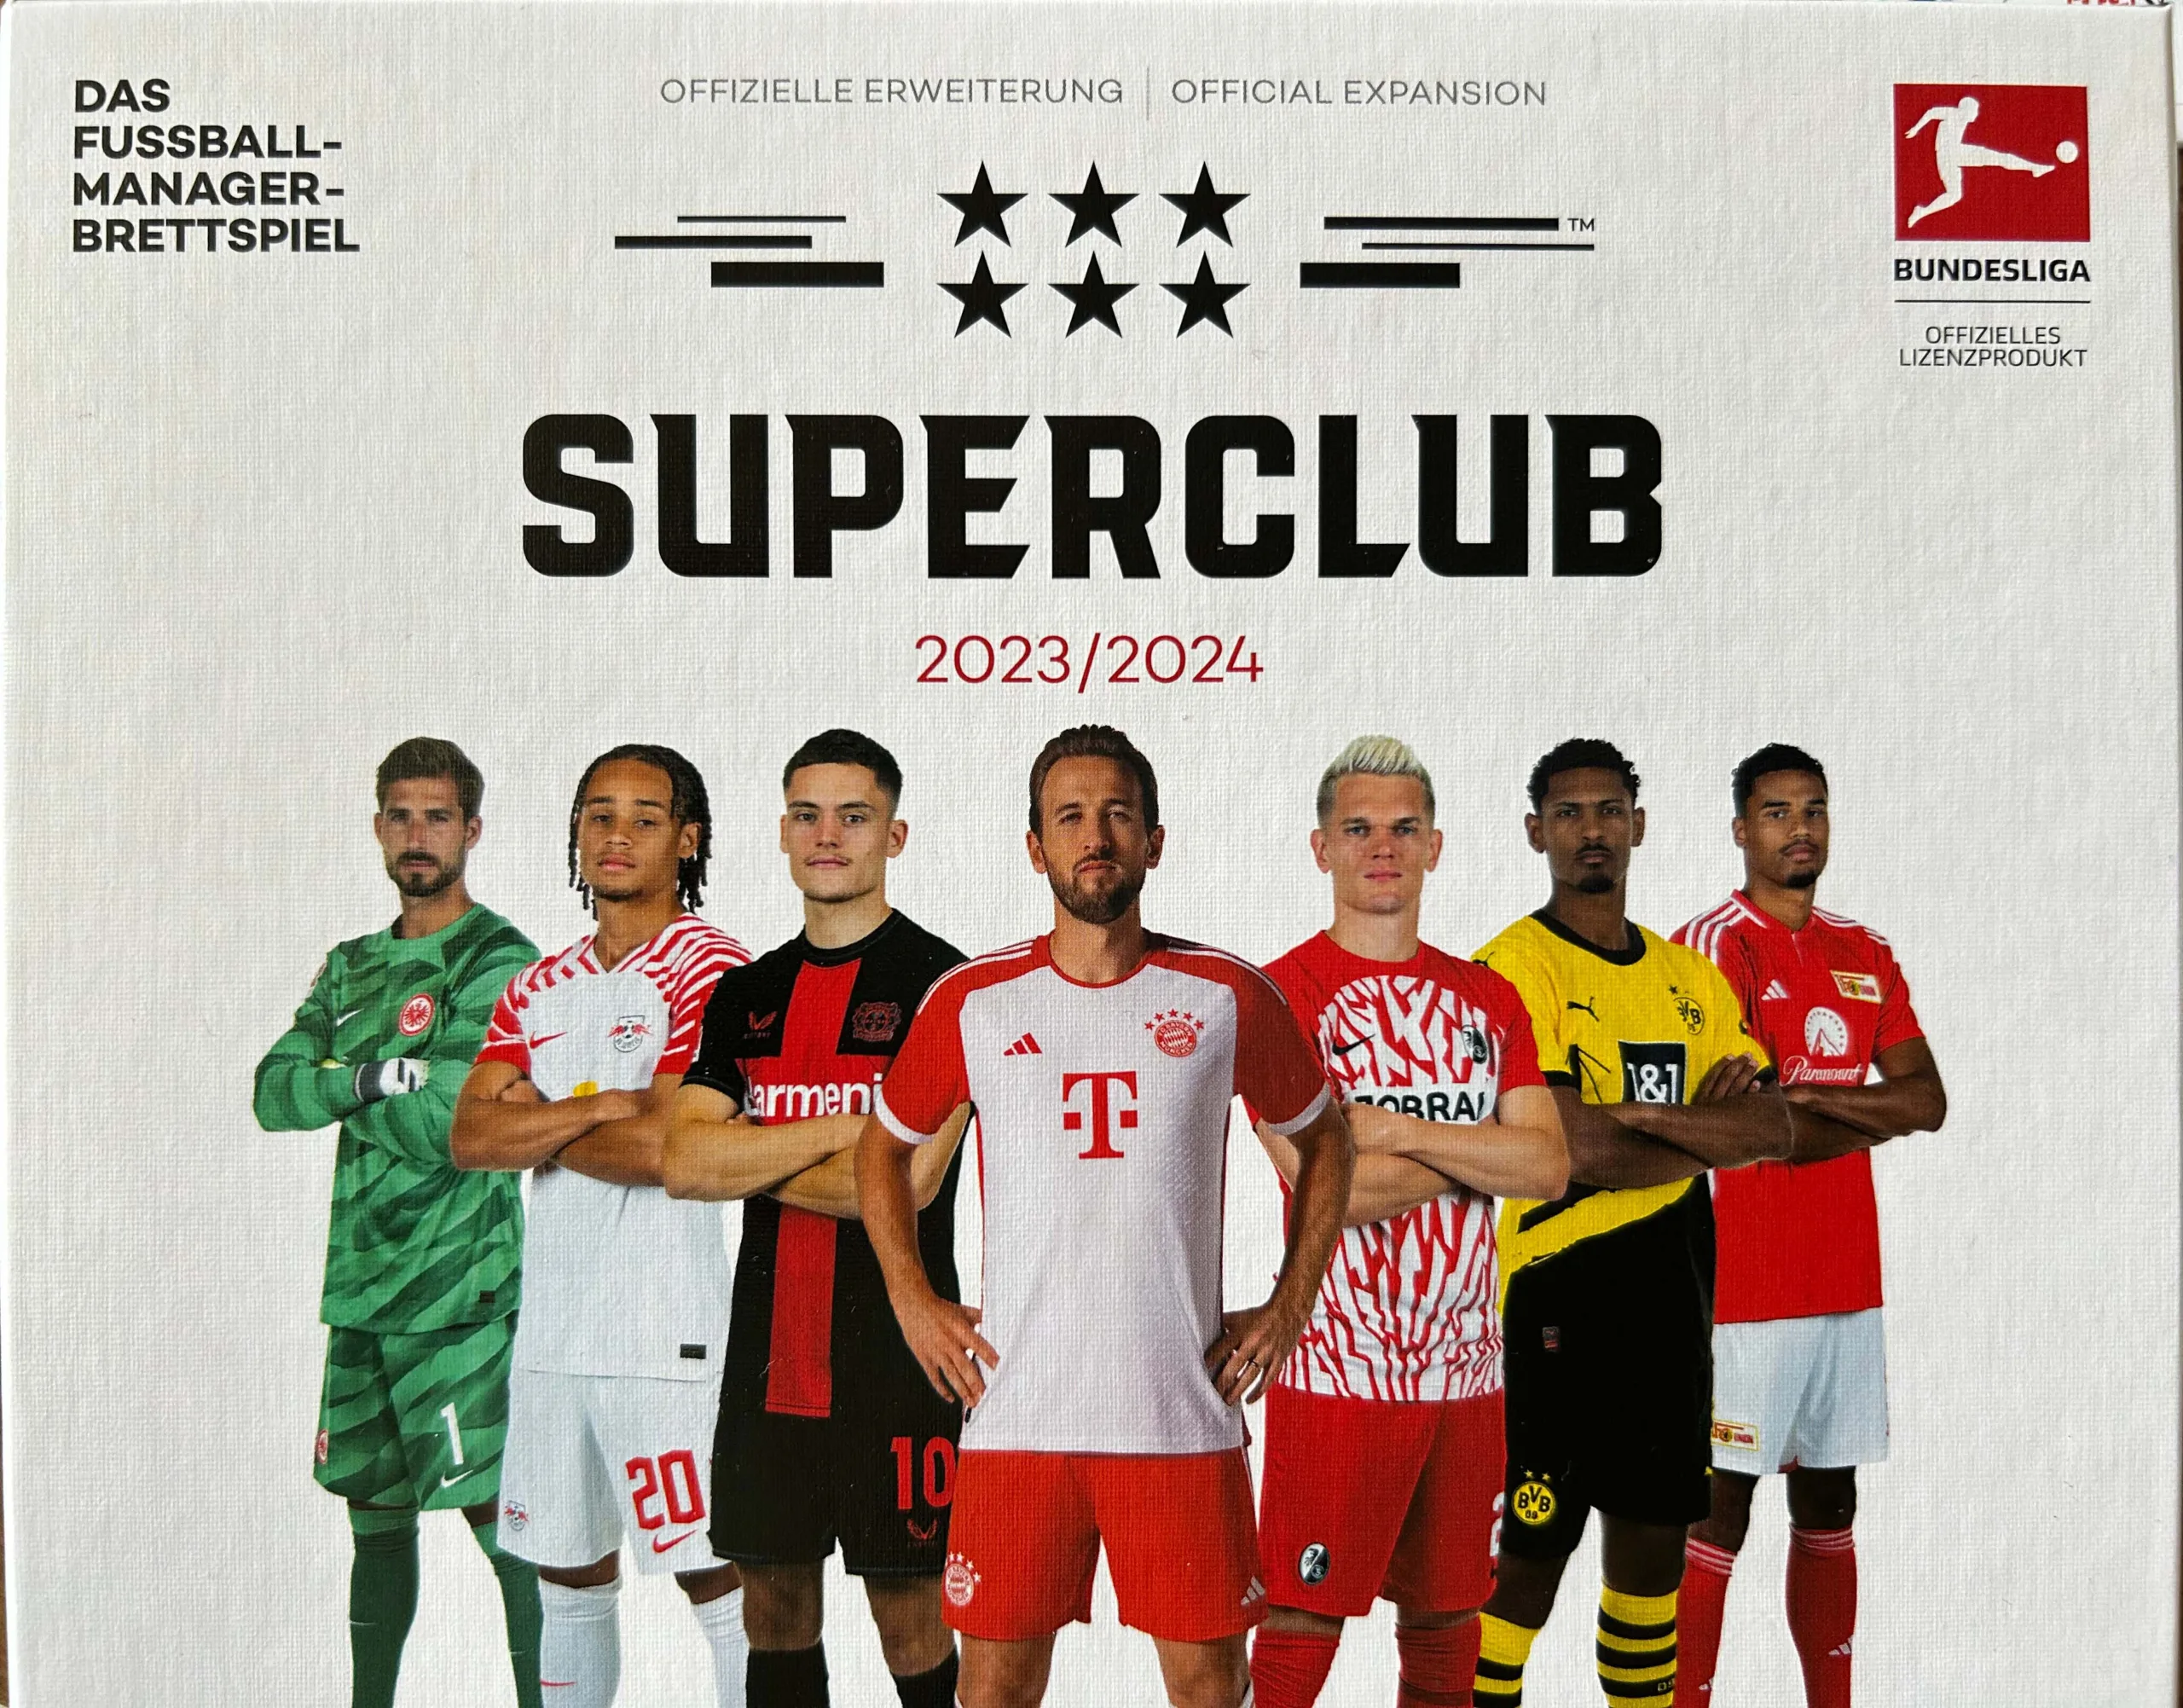 Superclub Bundesliga Expansion Box image